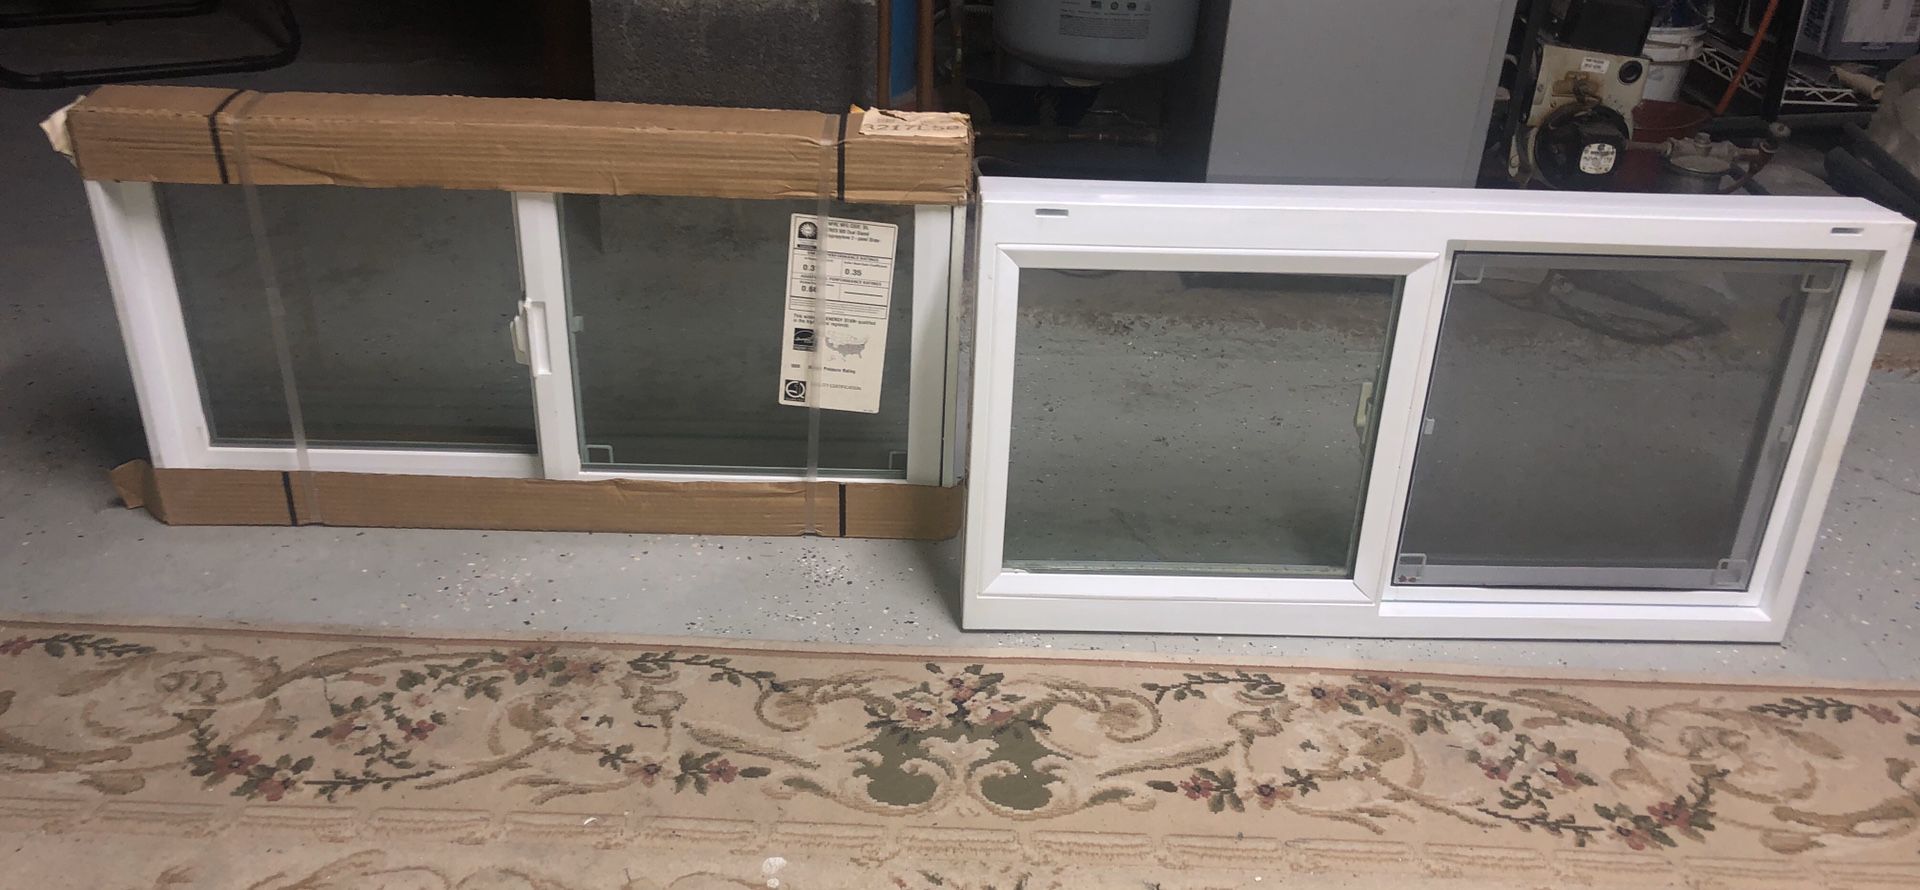 2 brand new basement windows by American craftsman (an Anderson co) 32x17 slider bathroom